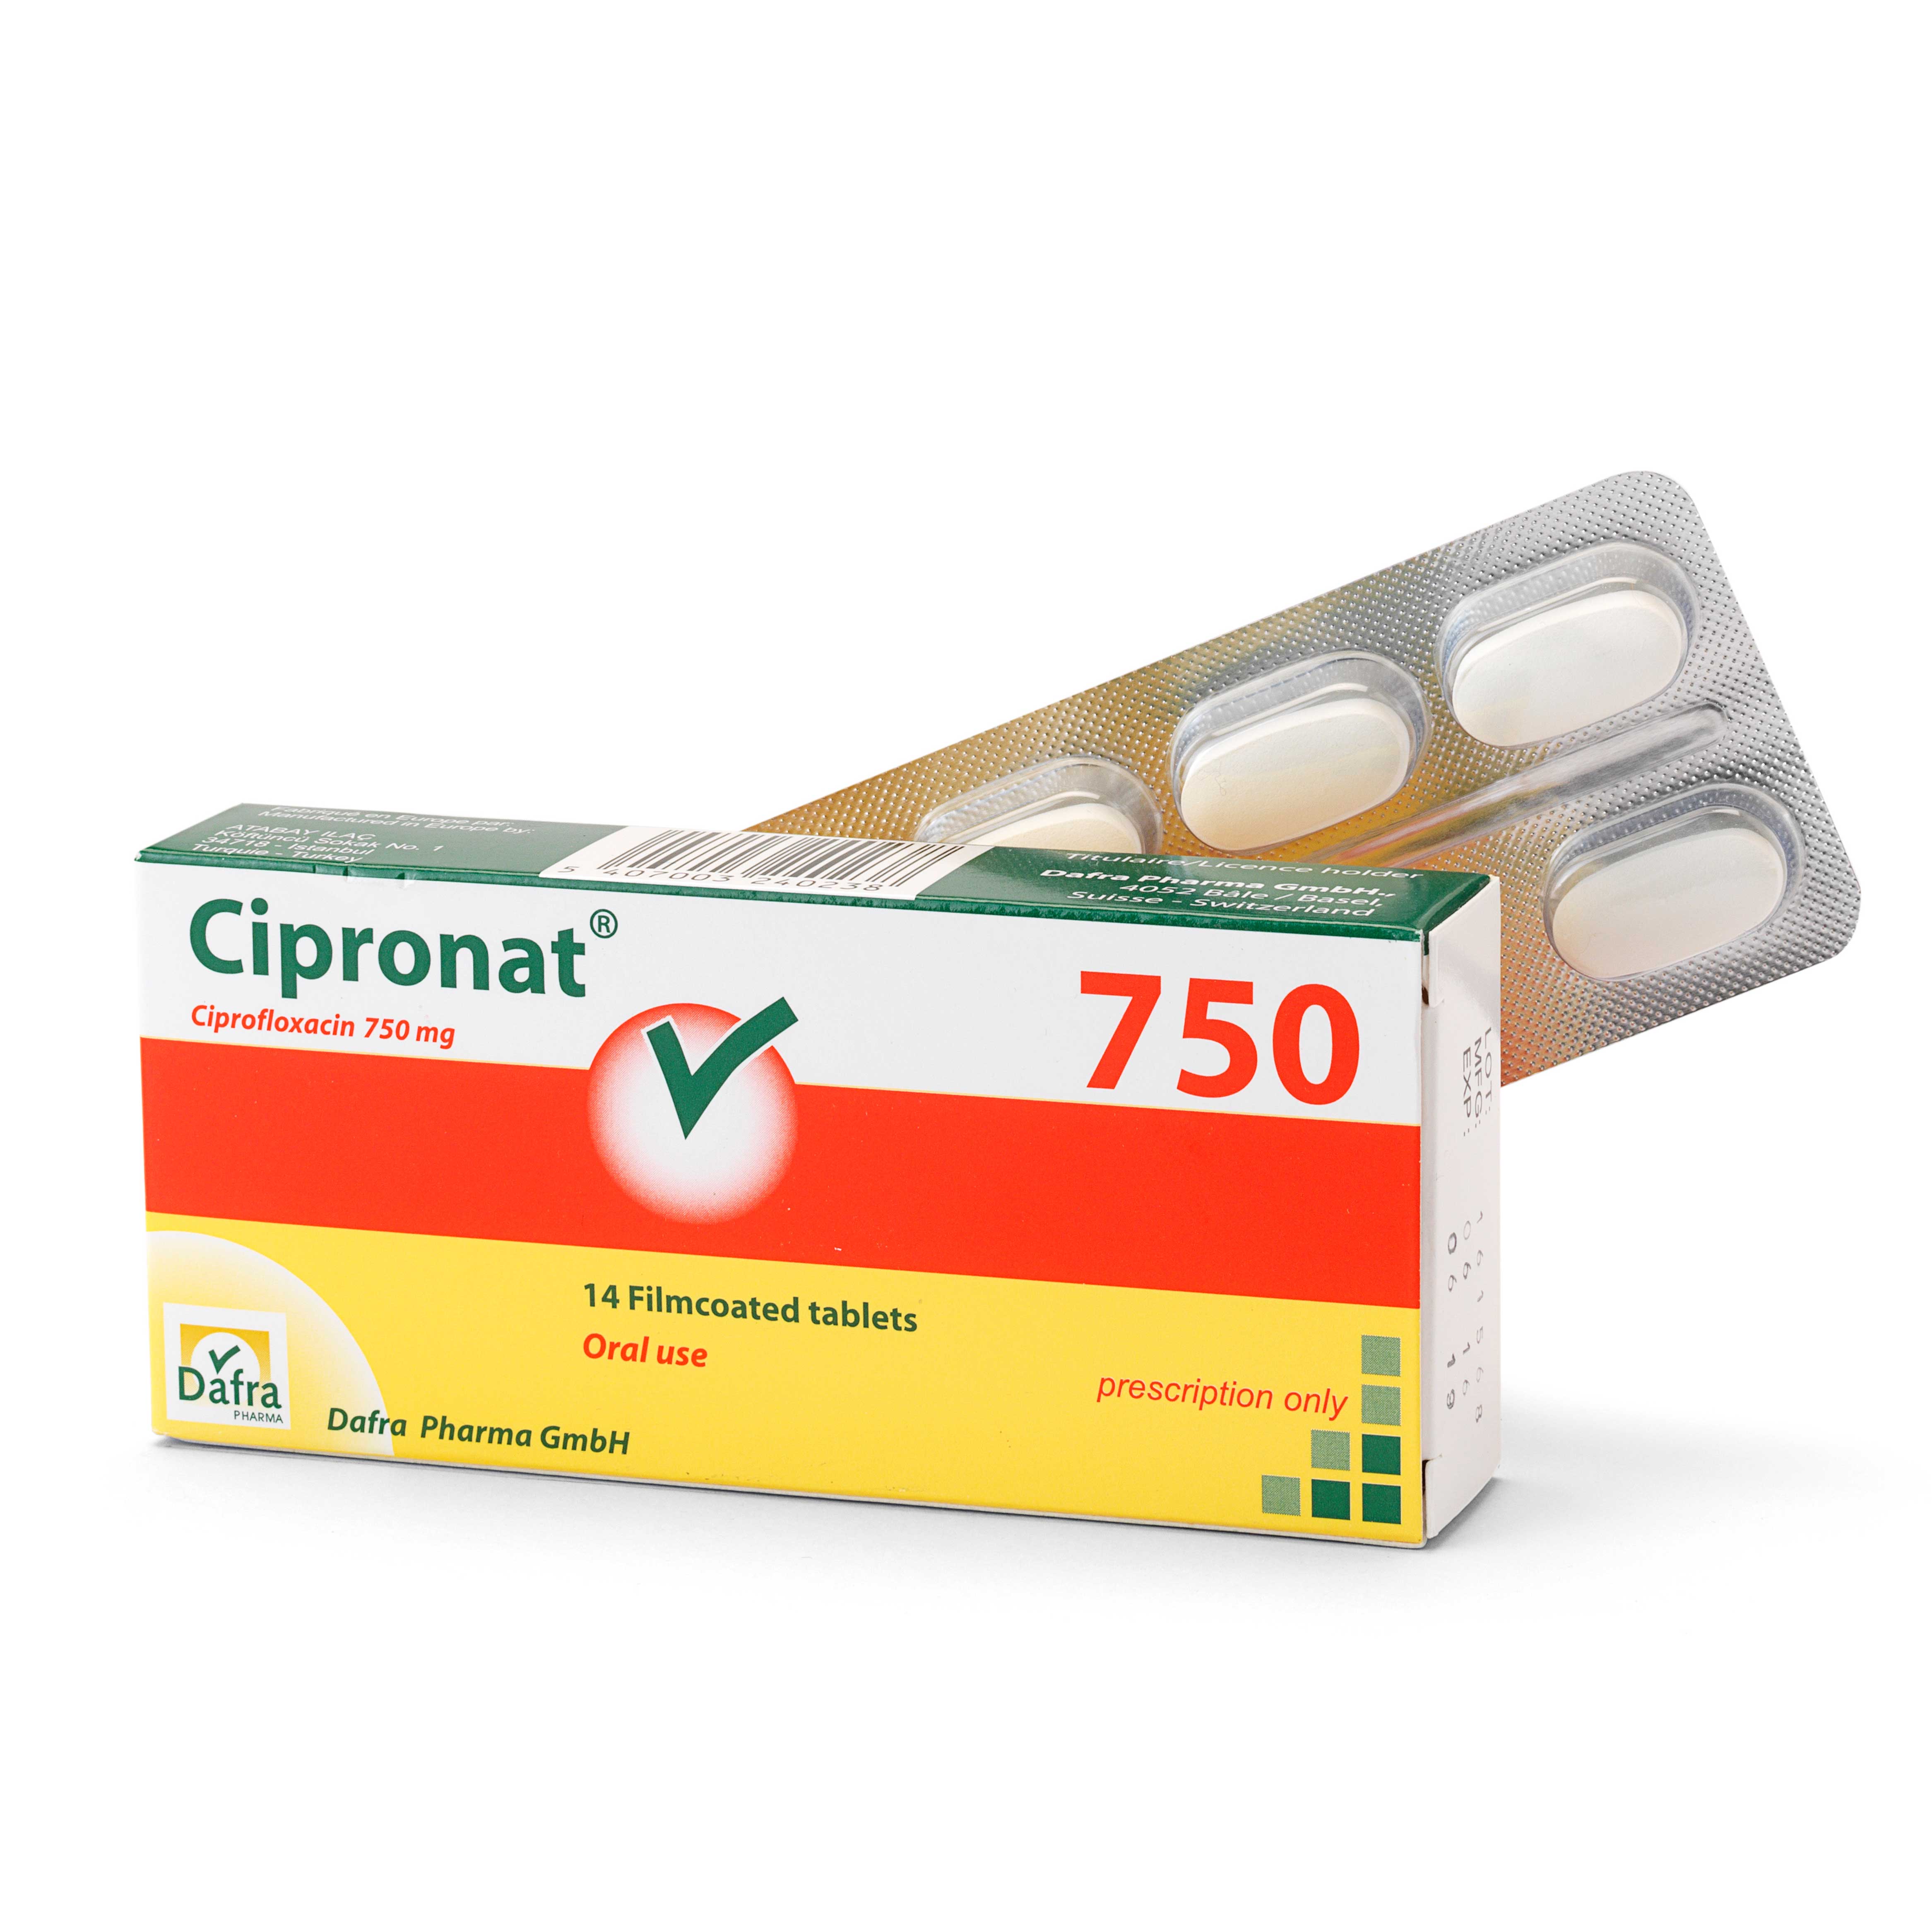 violist Bel terug Slijm Cipronat tablets 750 mg - Dafra Pharma